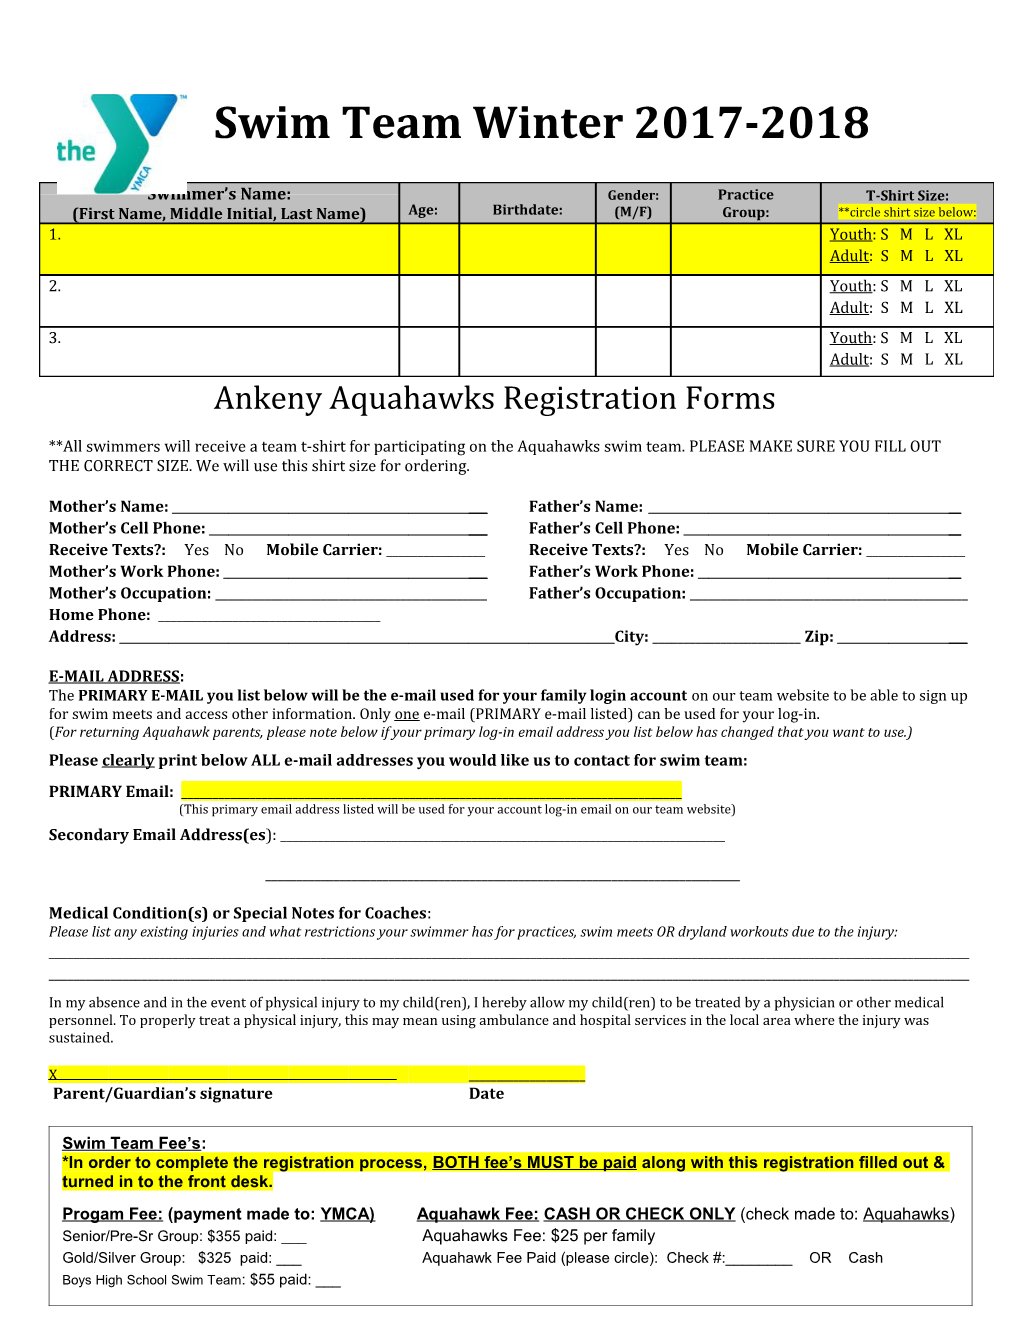 Ankeny Aquahawks Registration Forms